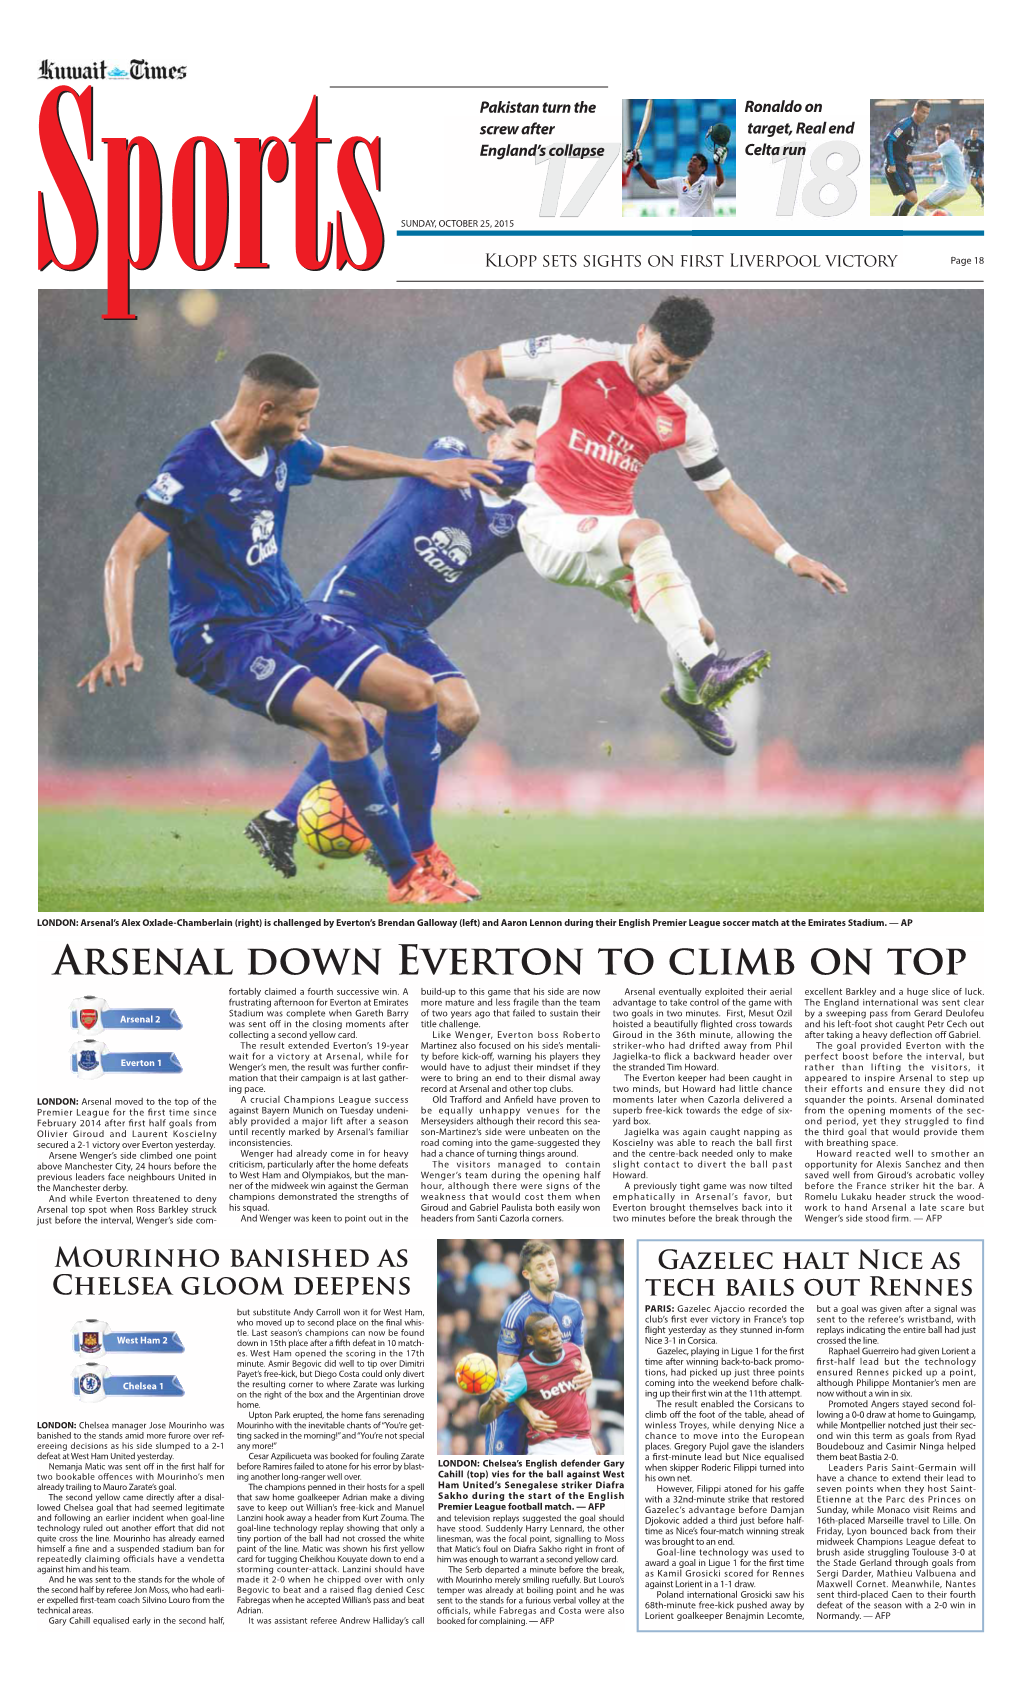 Arsenal Down Everton to Climb on Top